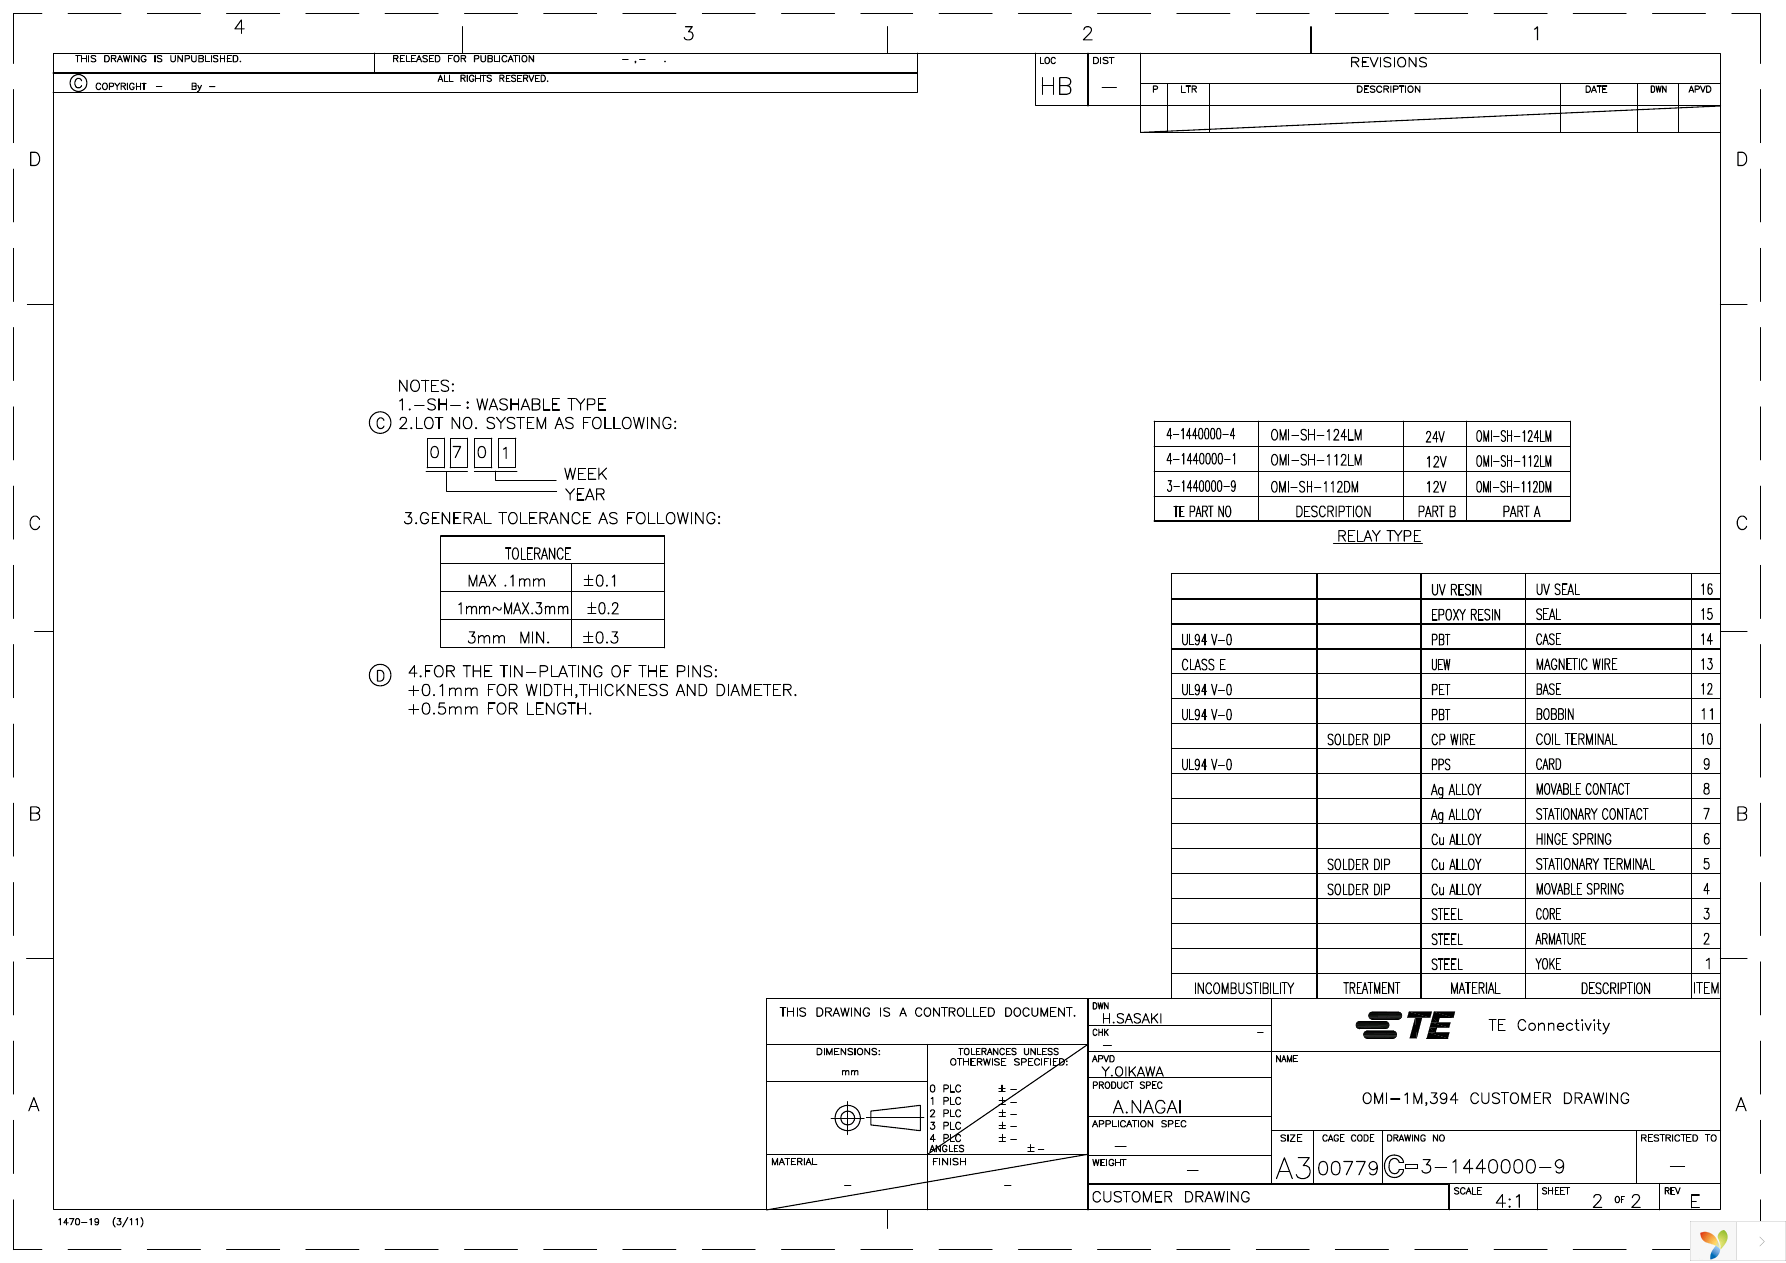 OMI-SH-112DM,394 Page 2